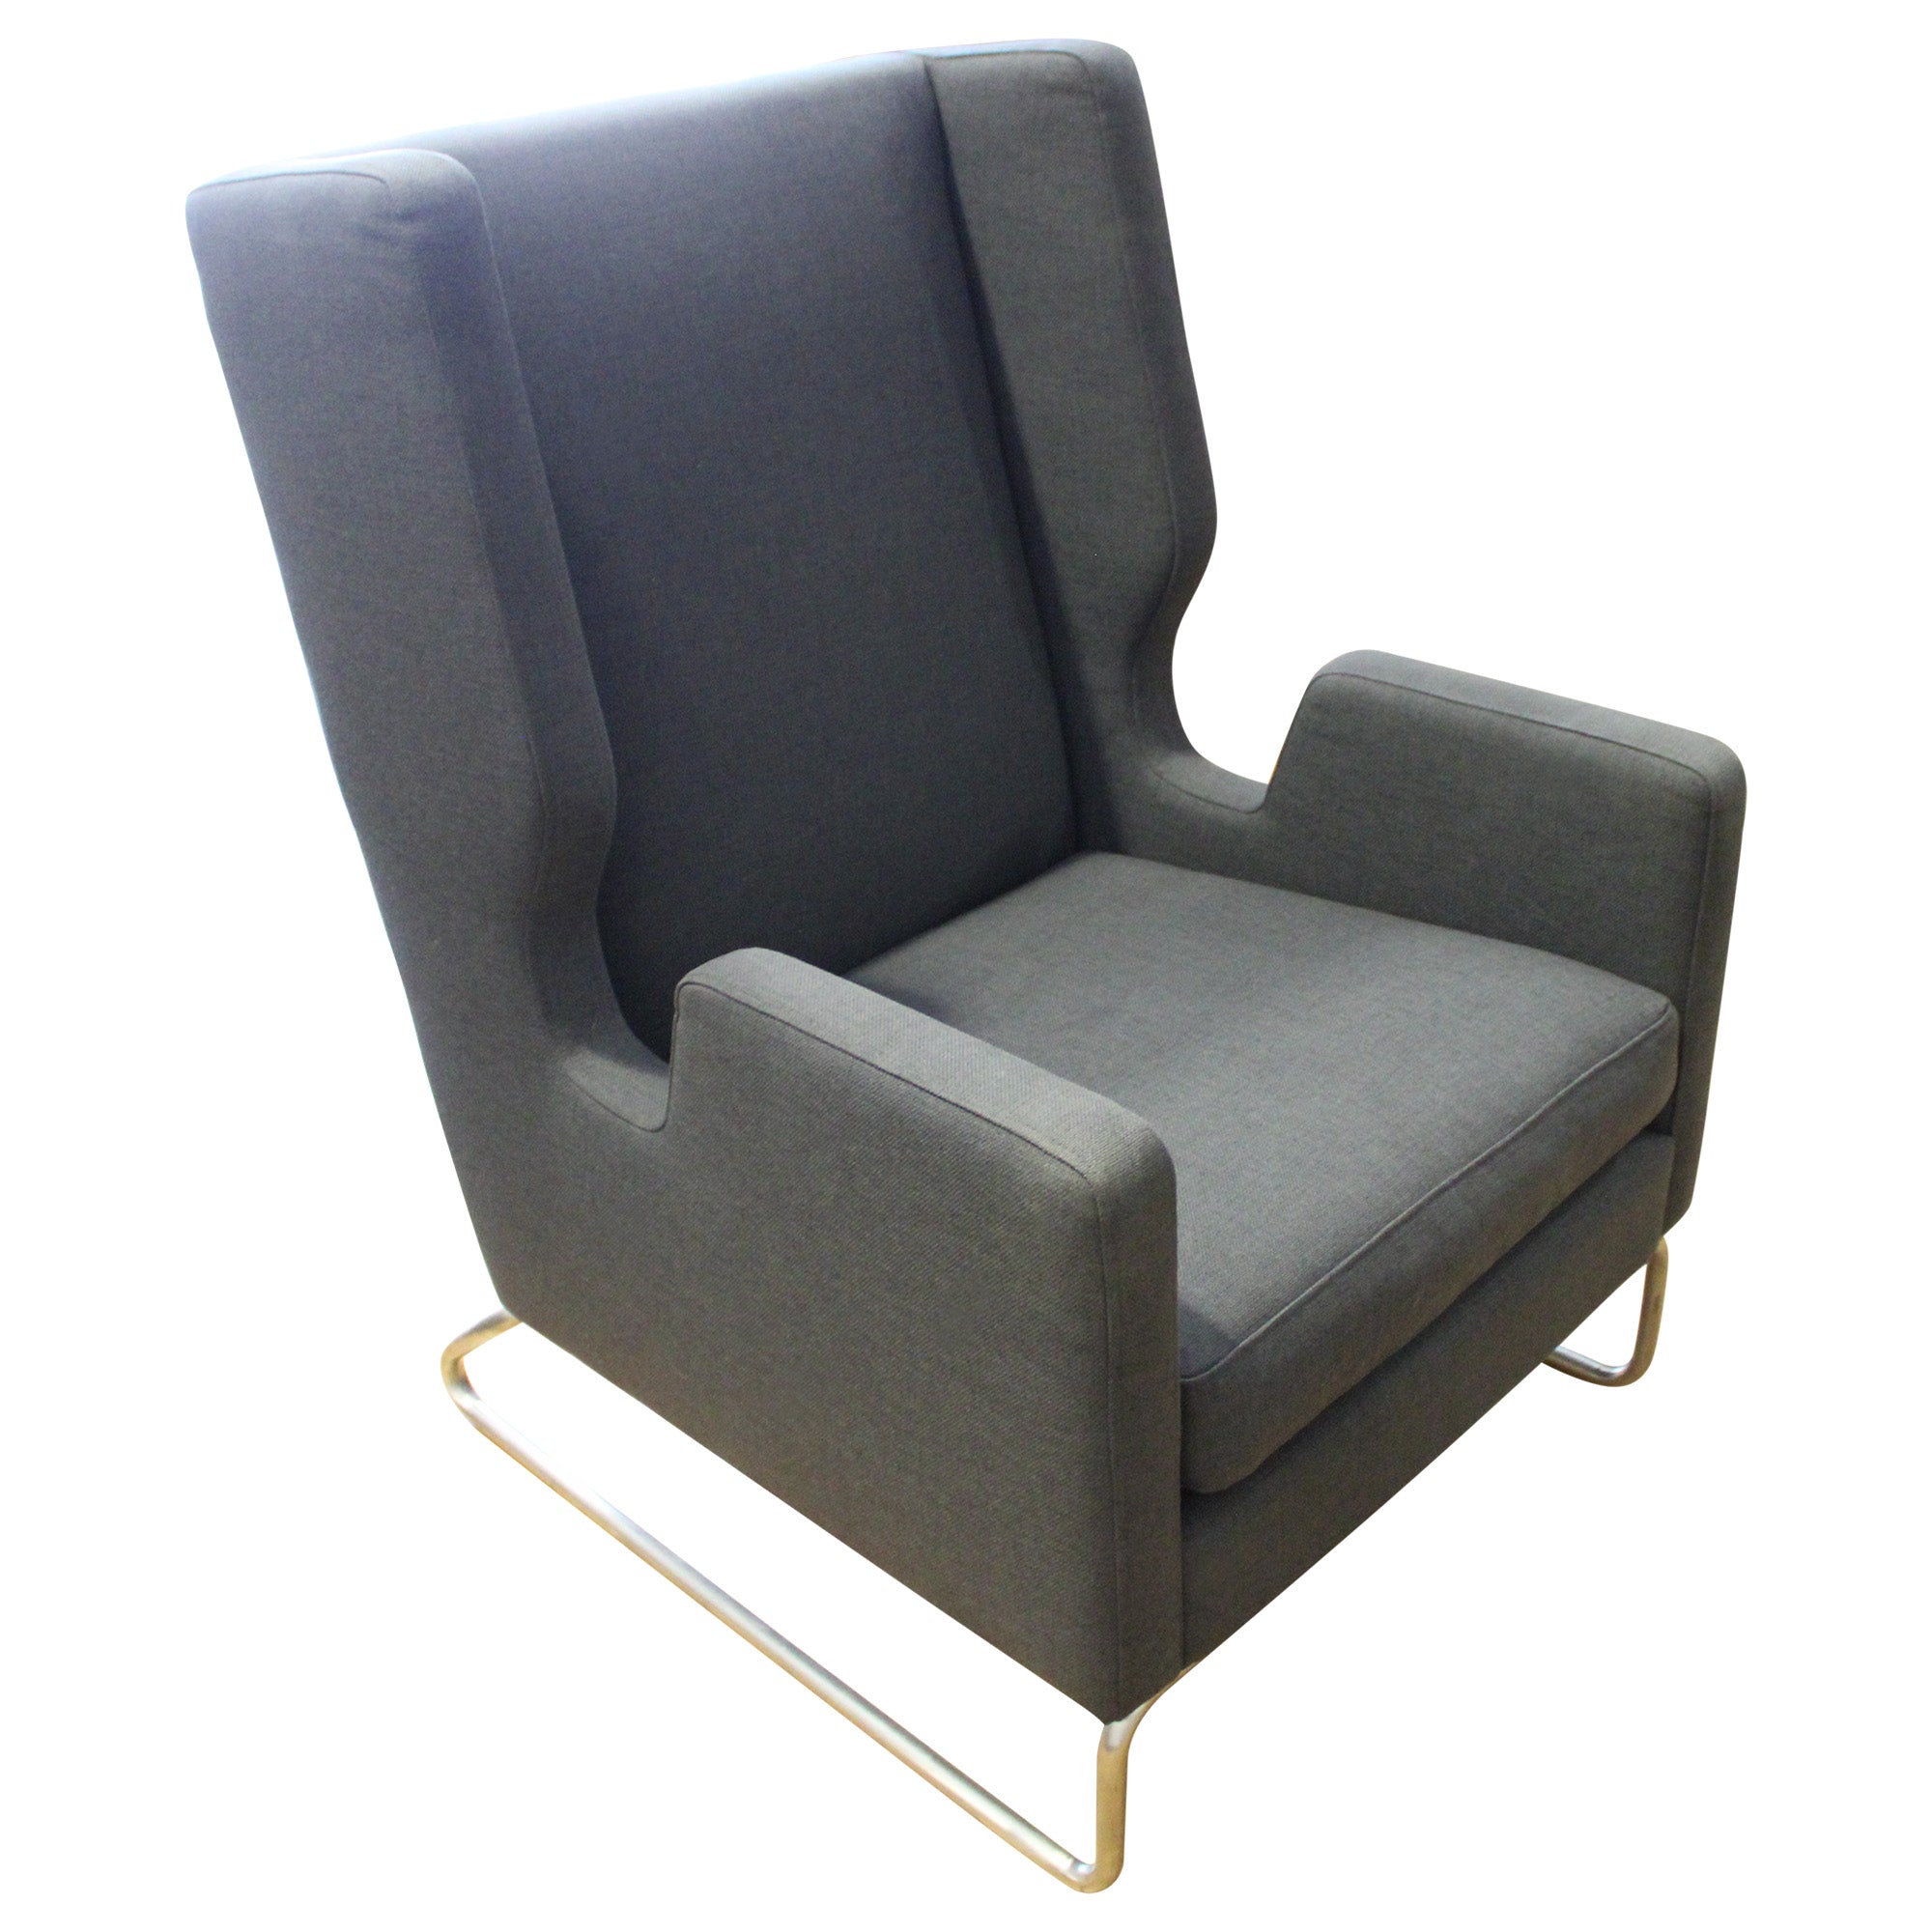 Gus Modern Danforth Chair - Dark Grey - Preowned